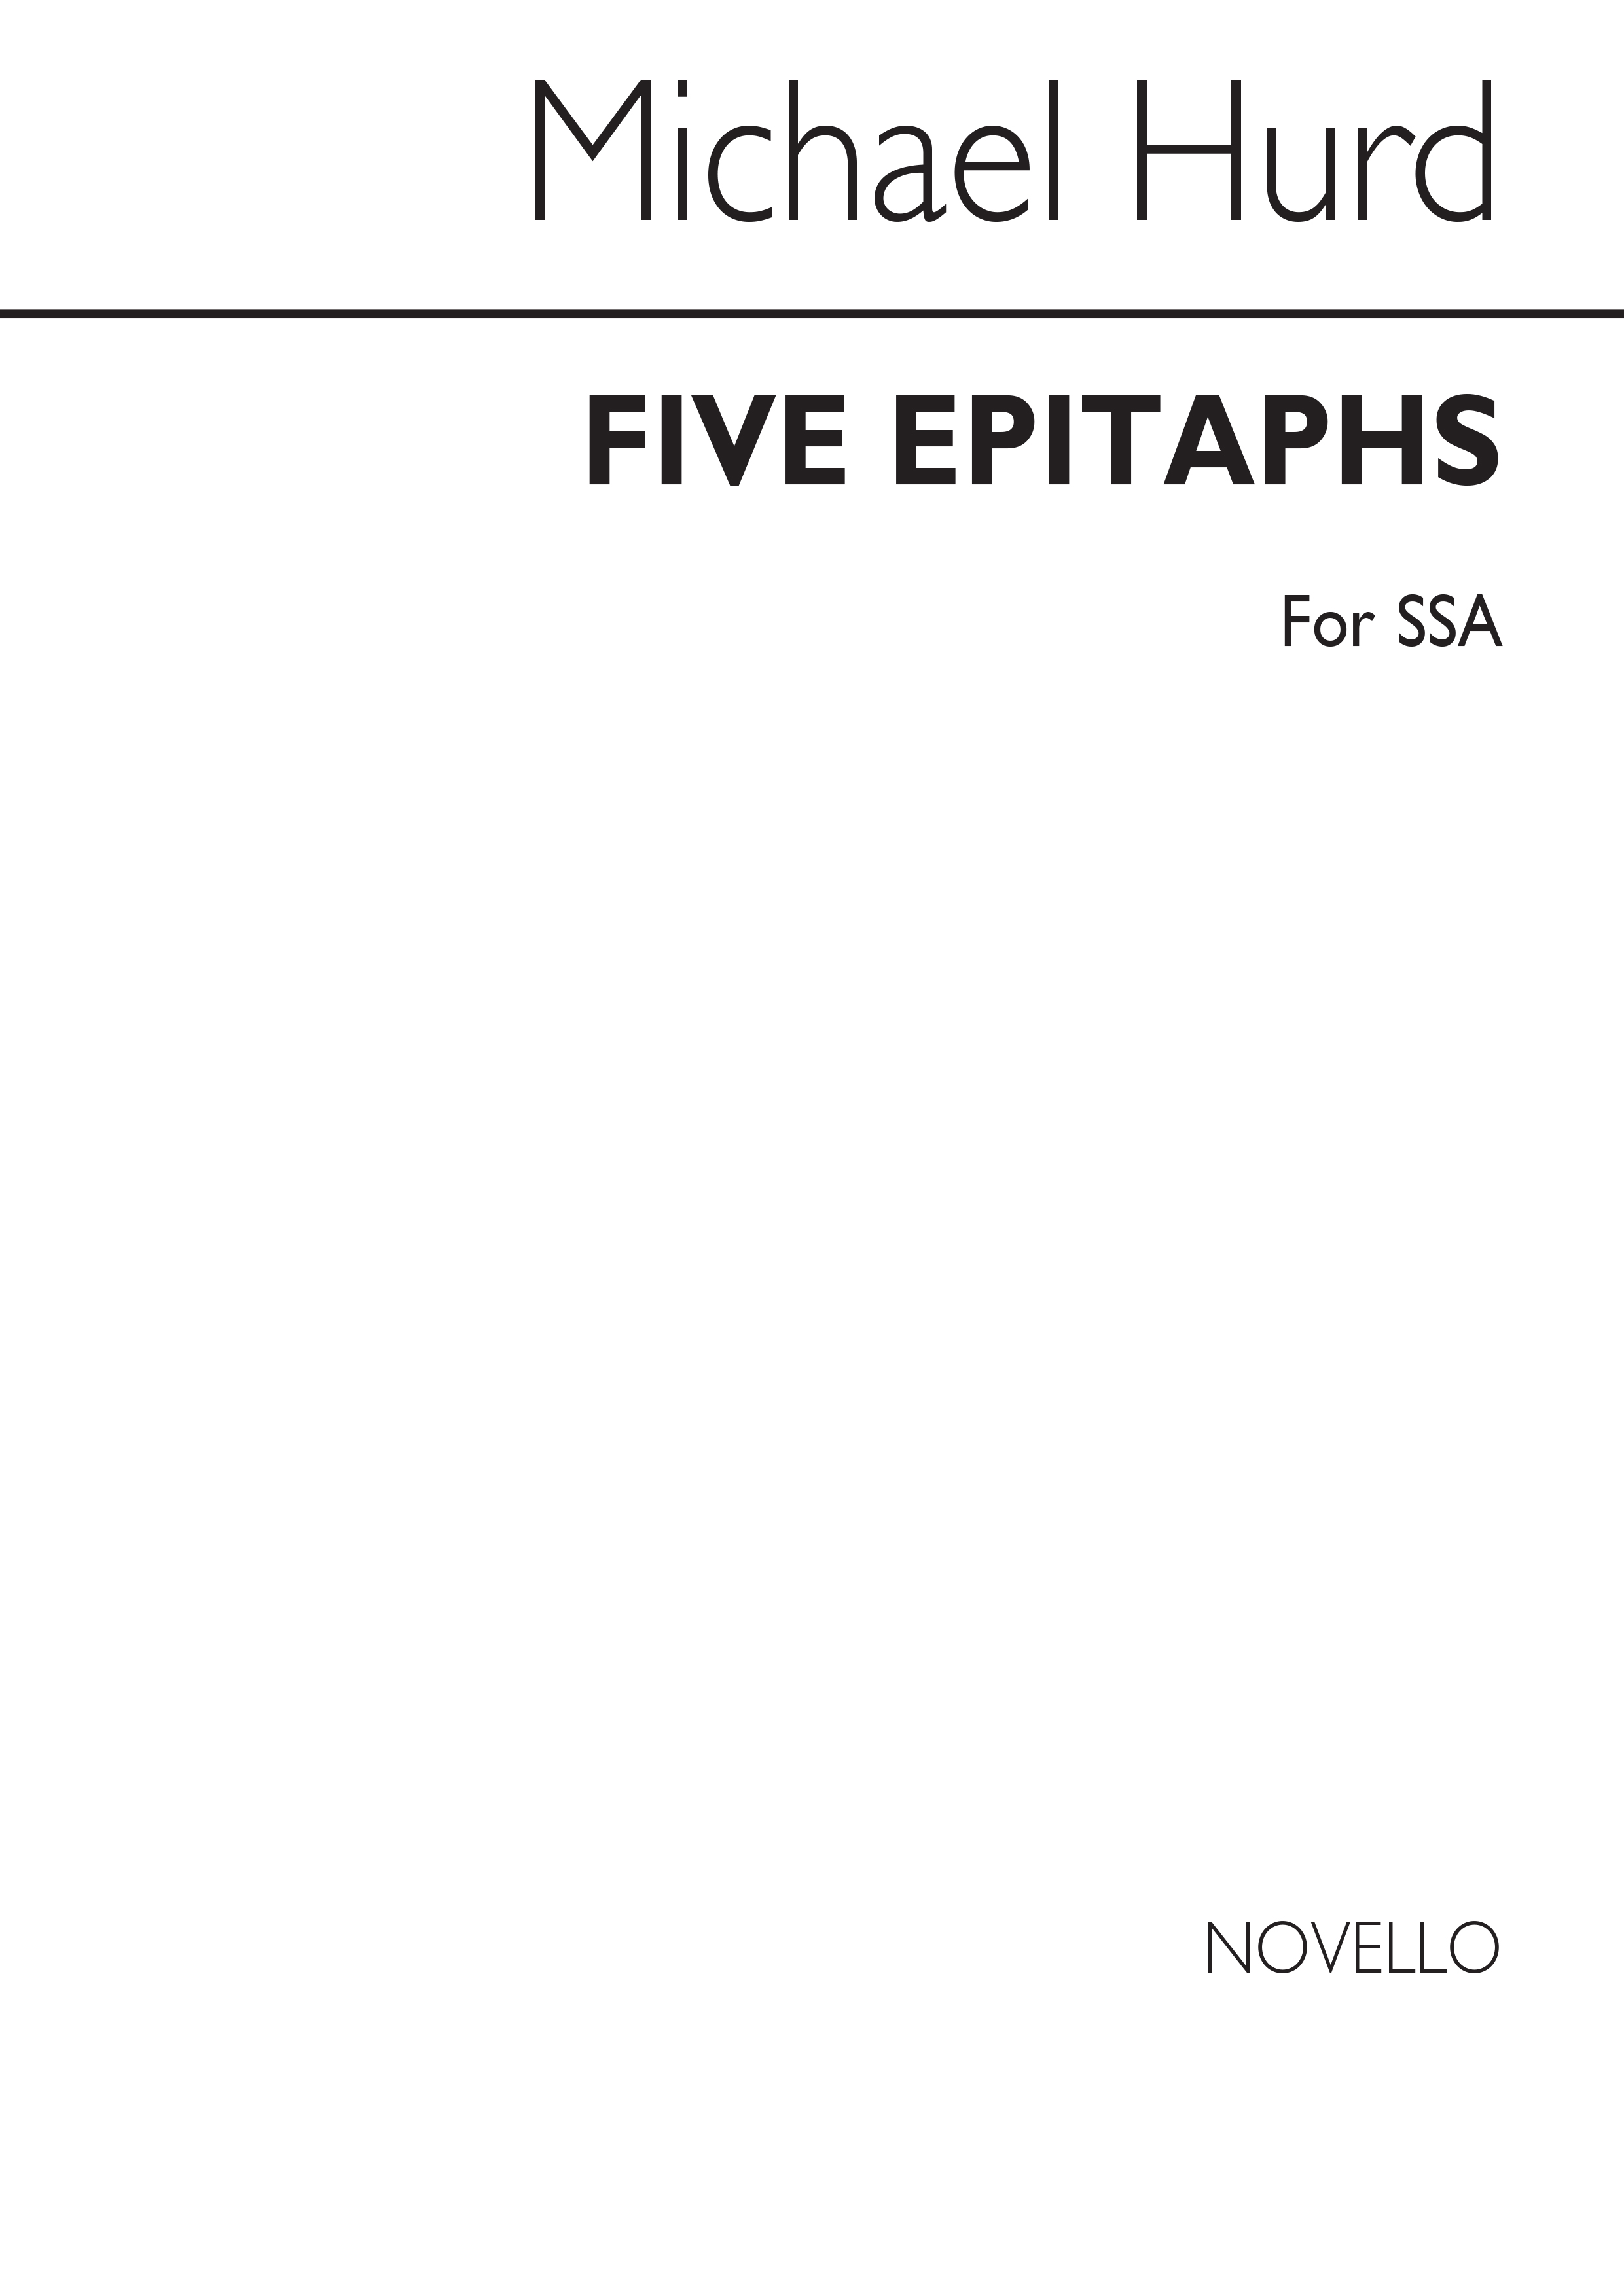 Hurd: Five Epitaphs for SSA